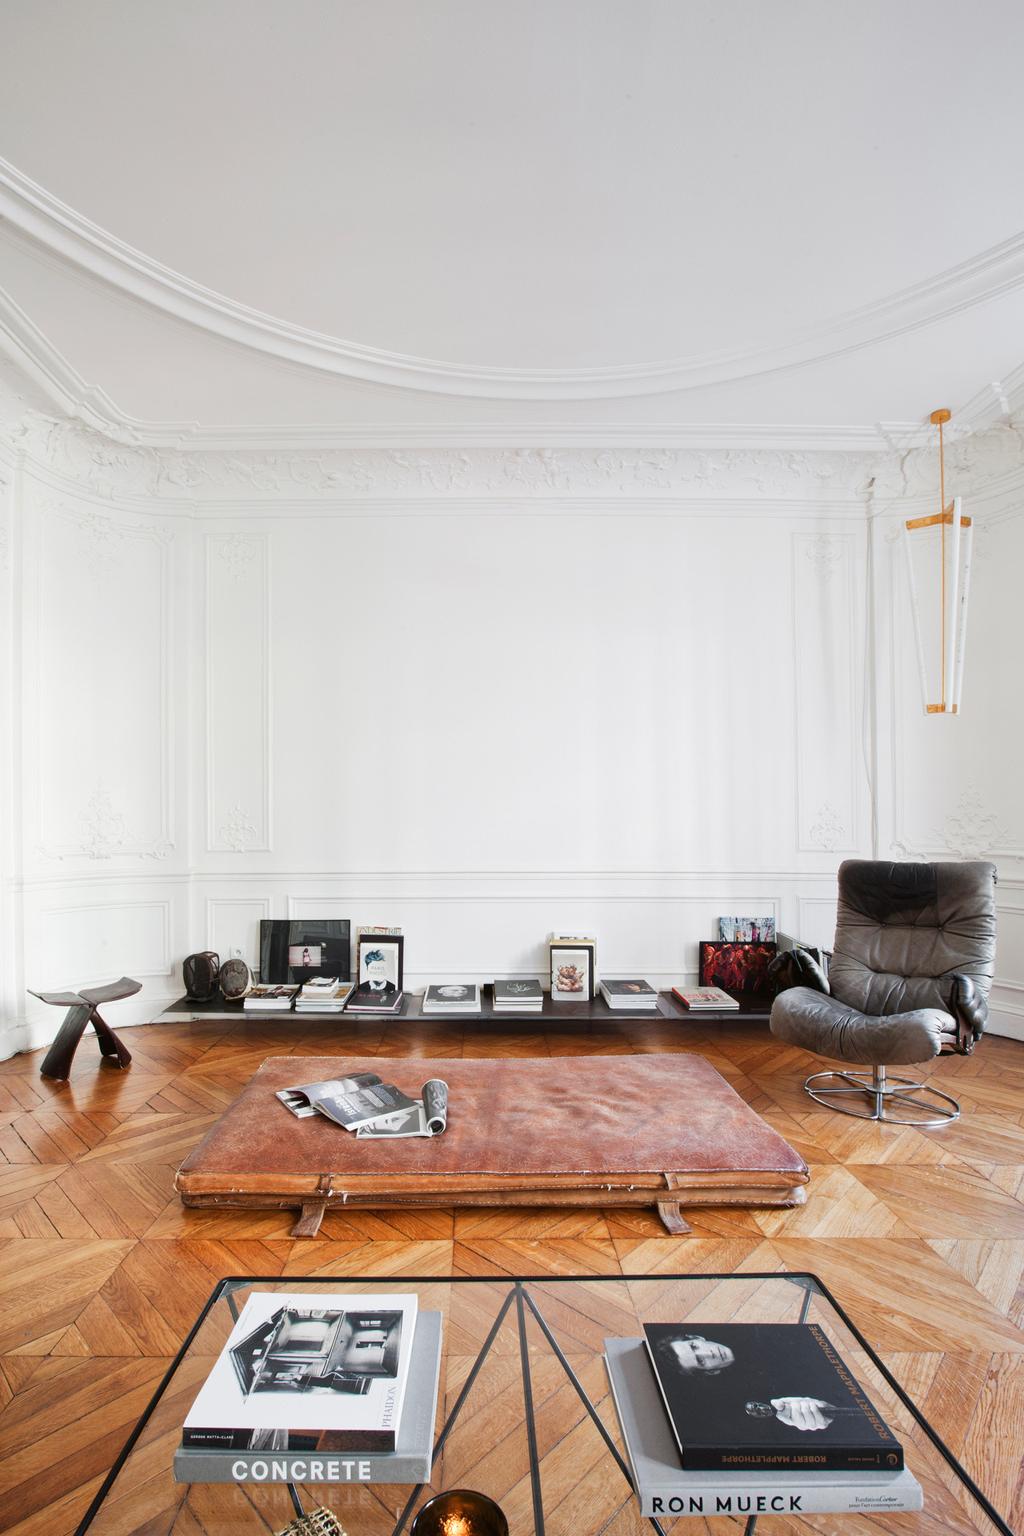 At Home With: Interior Designers Charlotte de Tonnac & Hugo Sauzay, Paris | No. 02